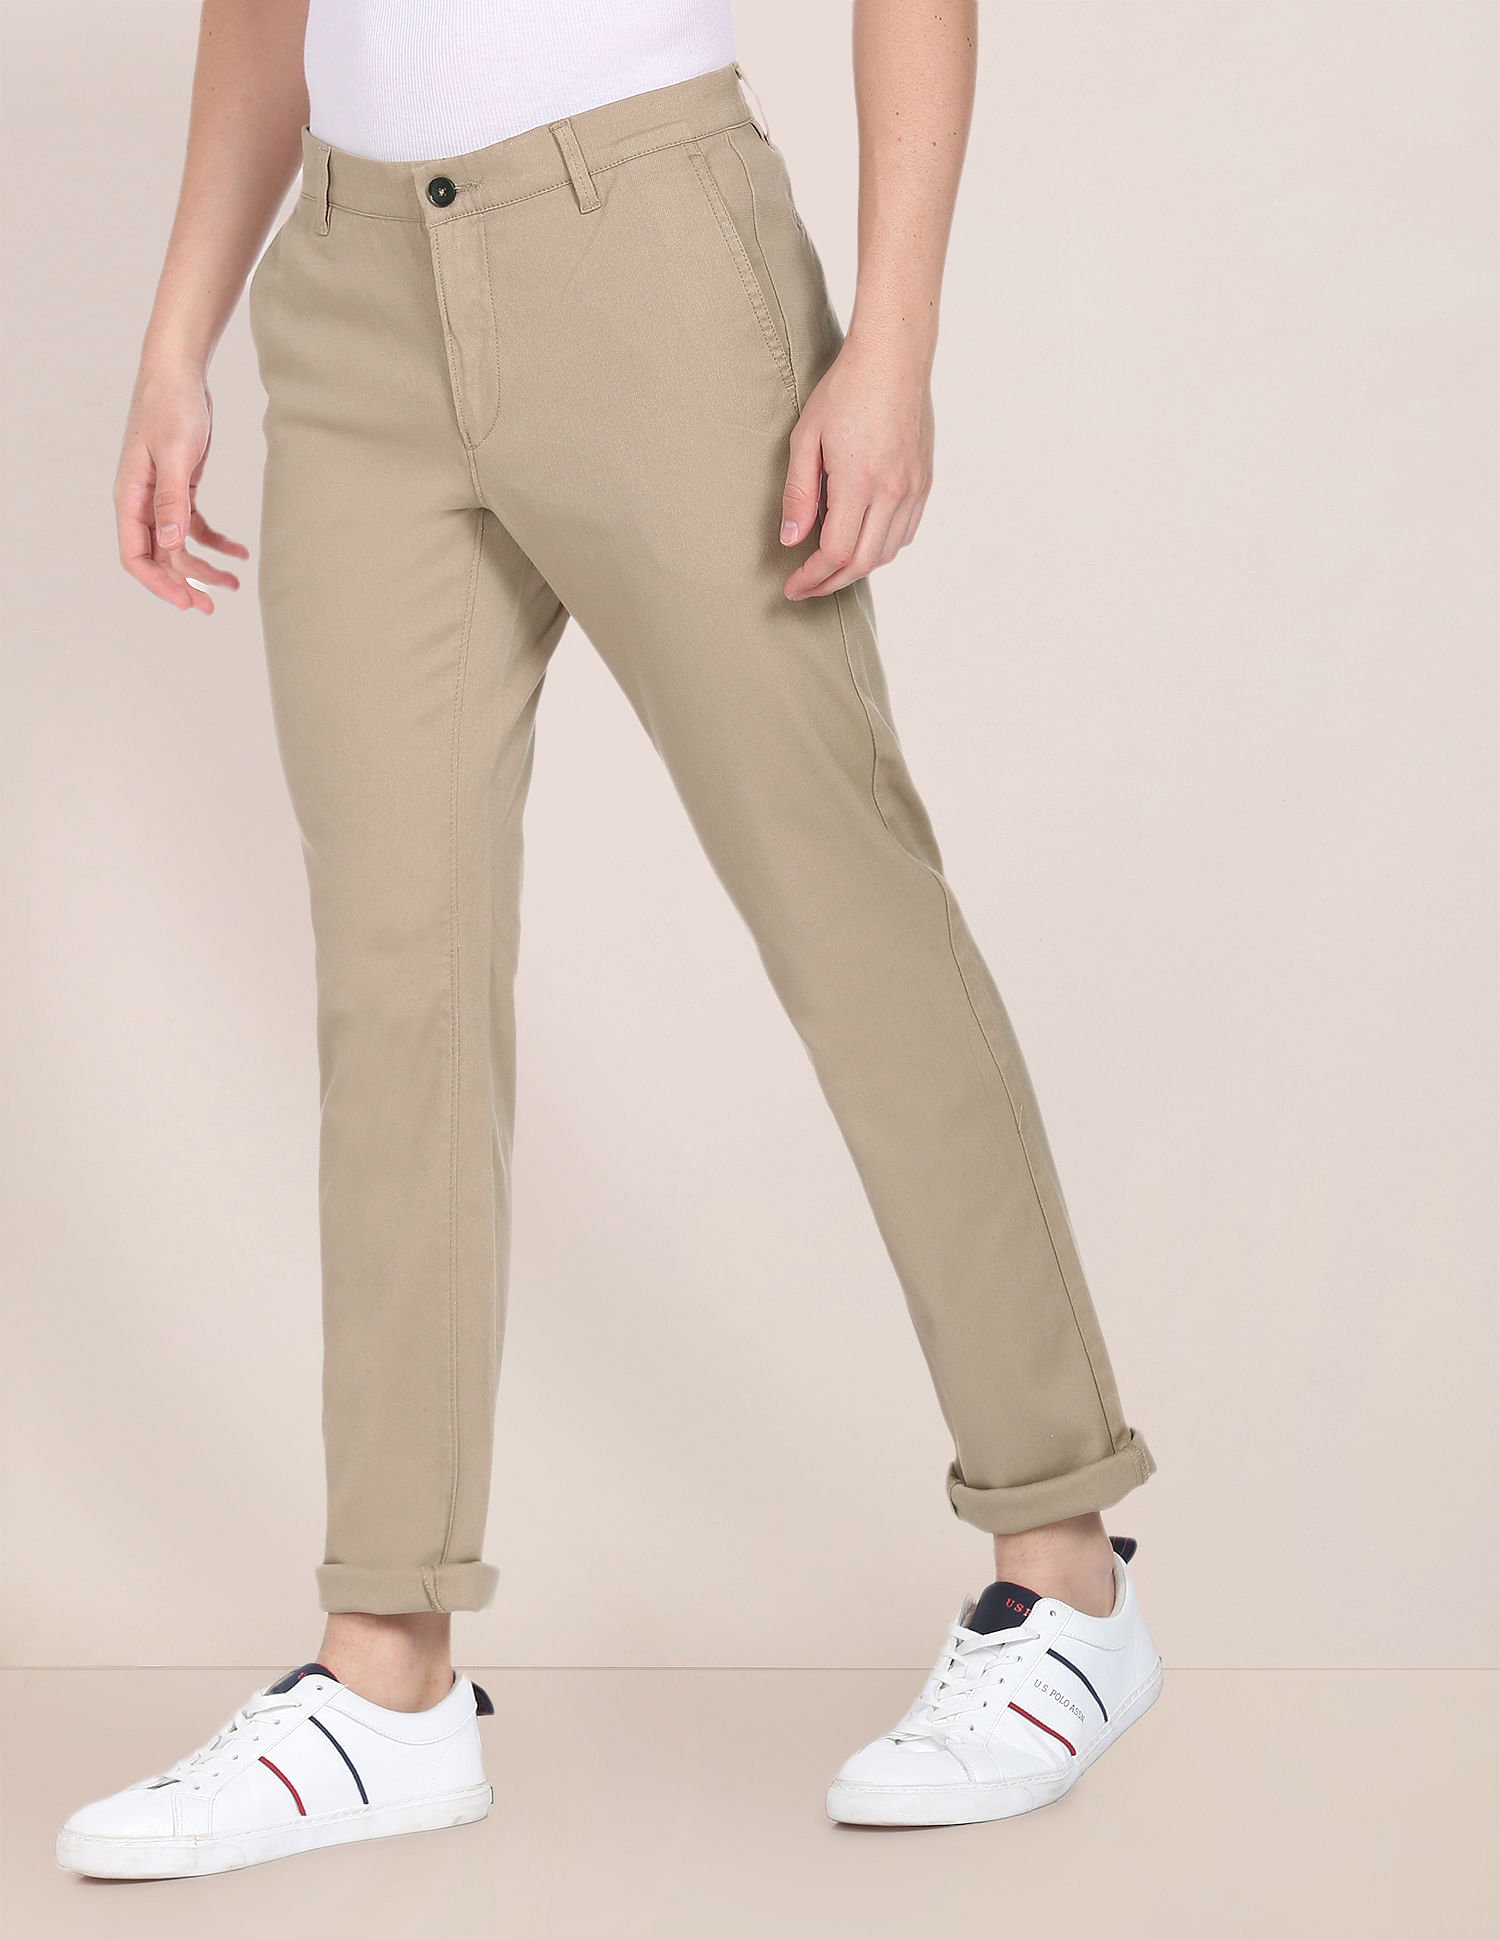 Xysaqa Men's Fashion Skinny Pants Summer Slim Fit Casual Work Pant Cotton  Business Trousers - Walmart.com